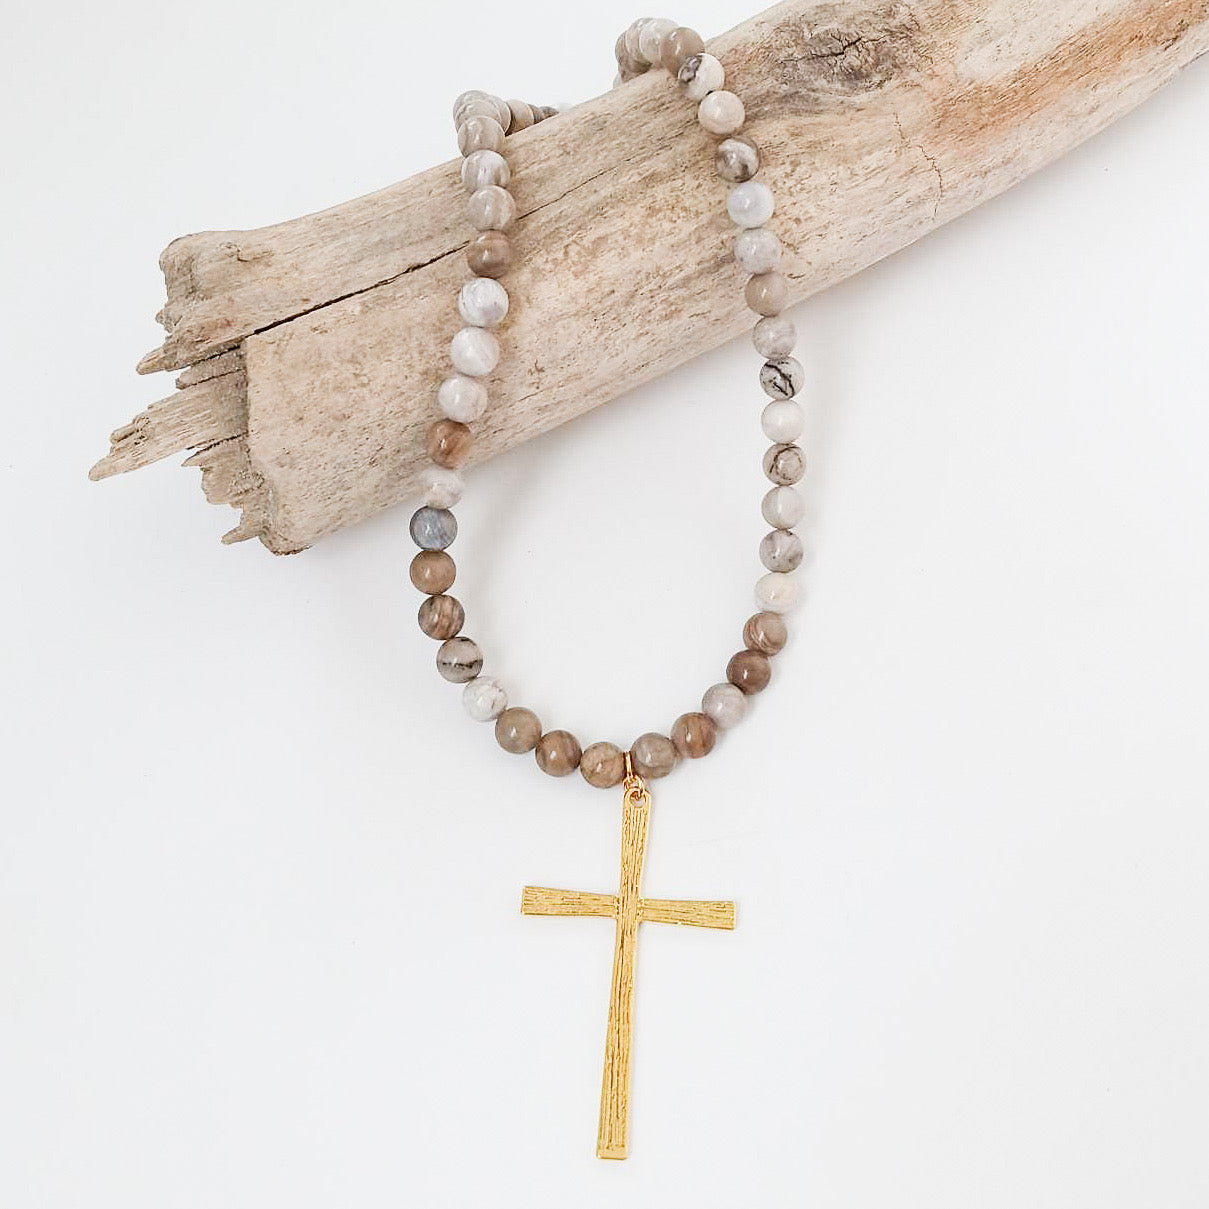 Beaded Cross Necklace 18”